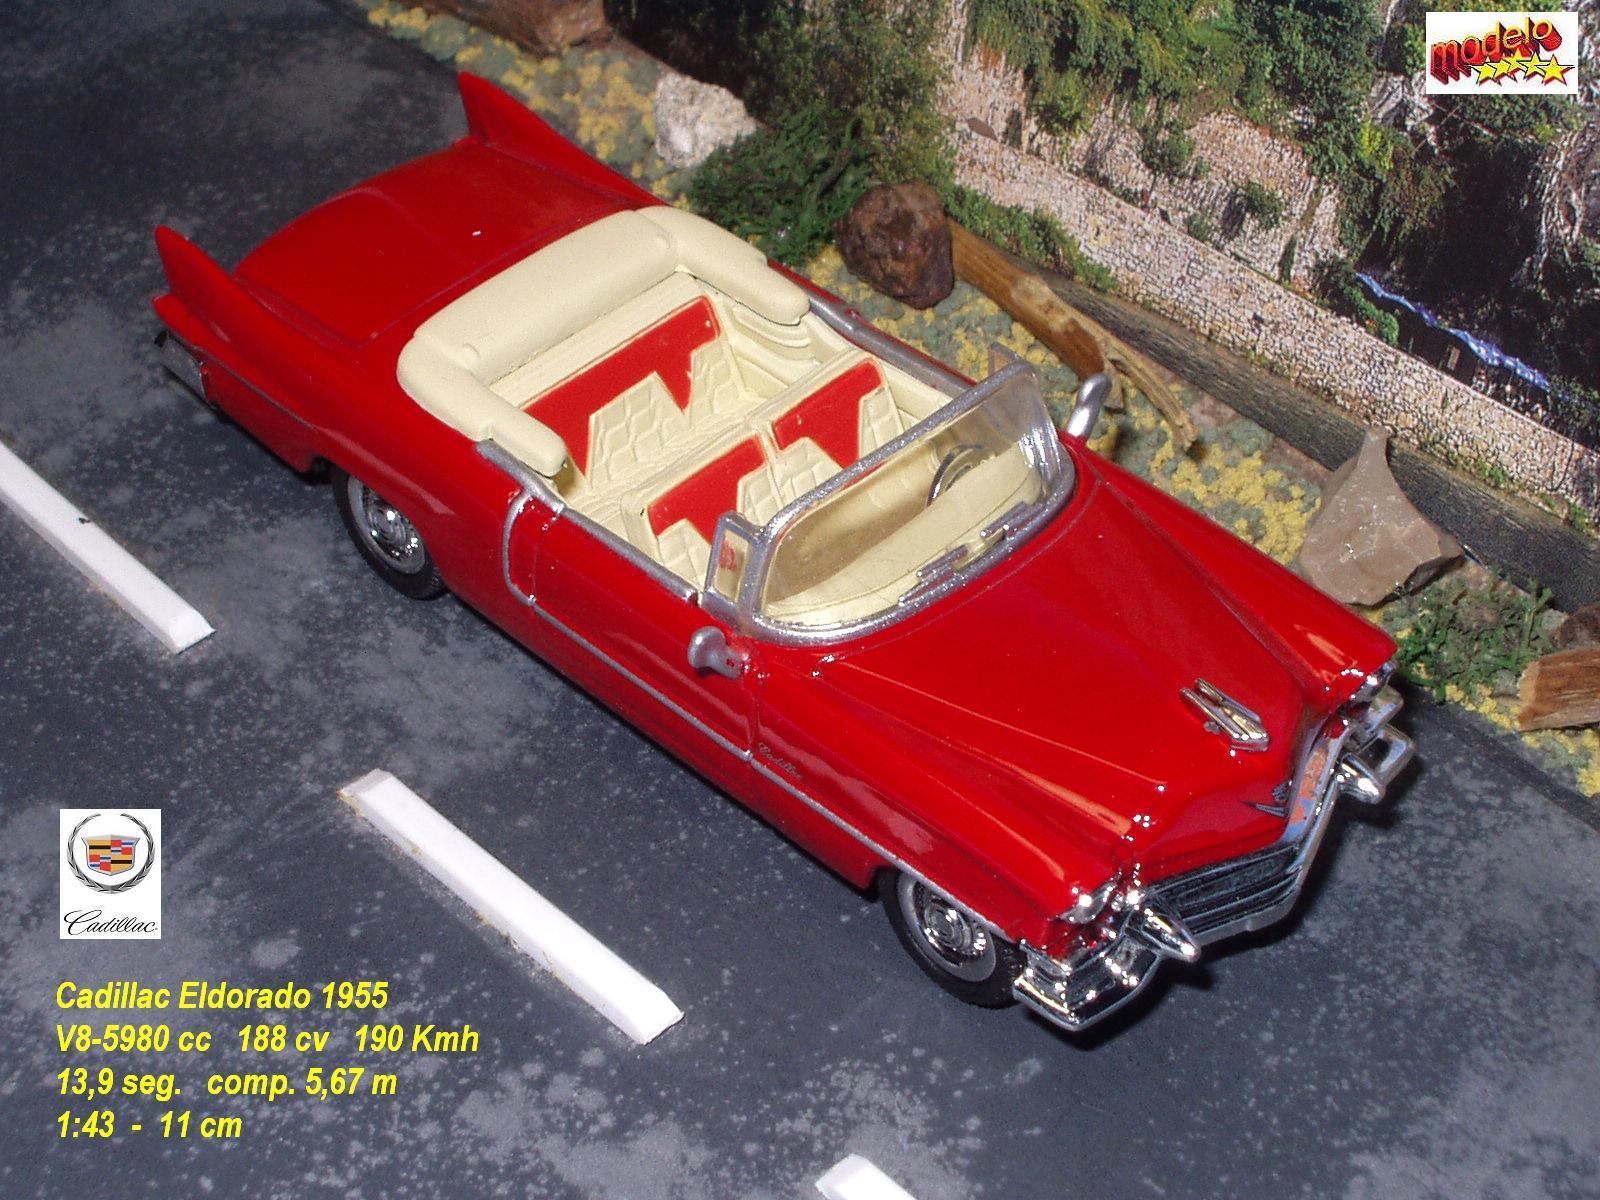 [Cadillac+Eldorado+1955+1.43-11+cm.jpg]